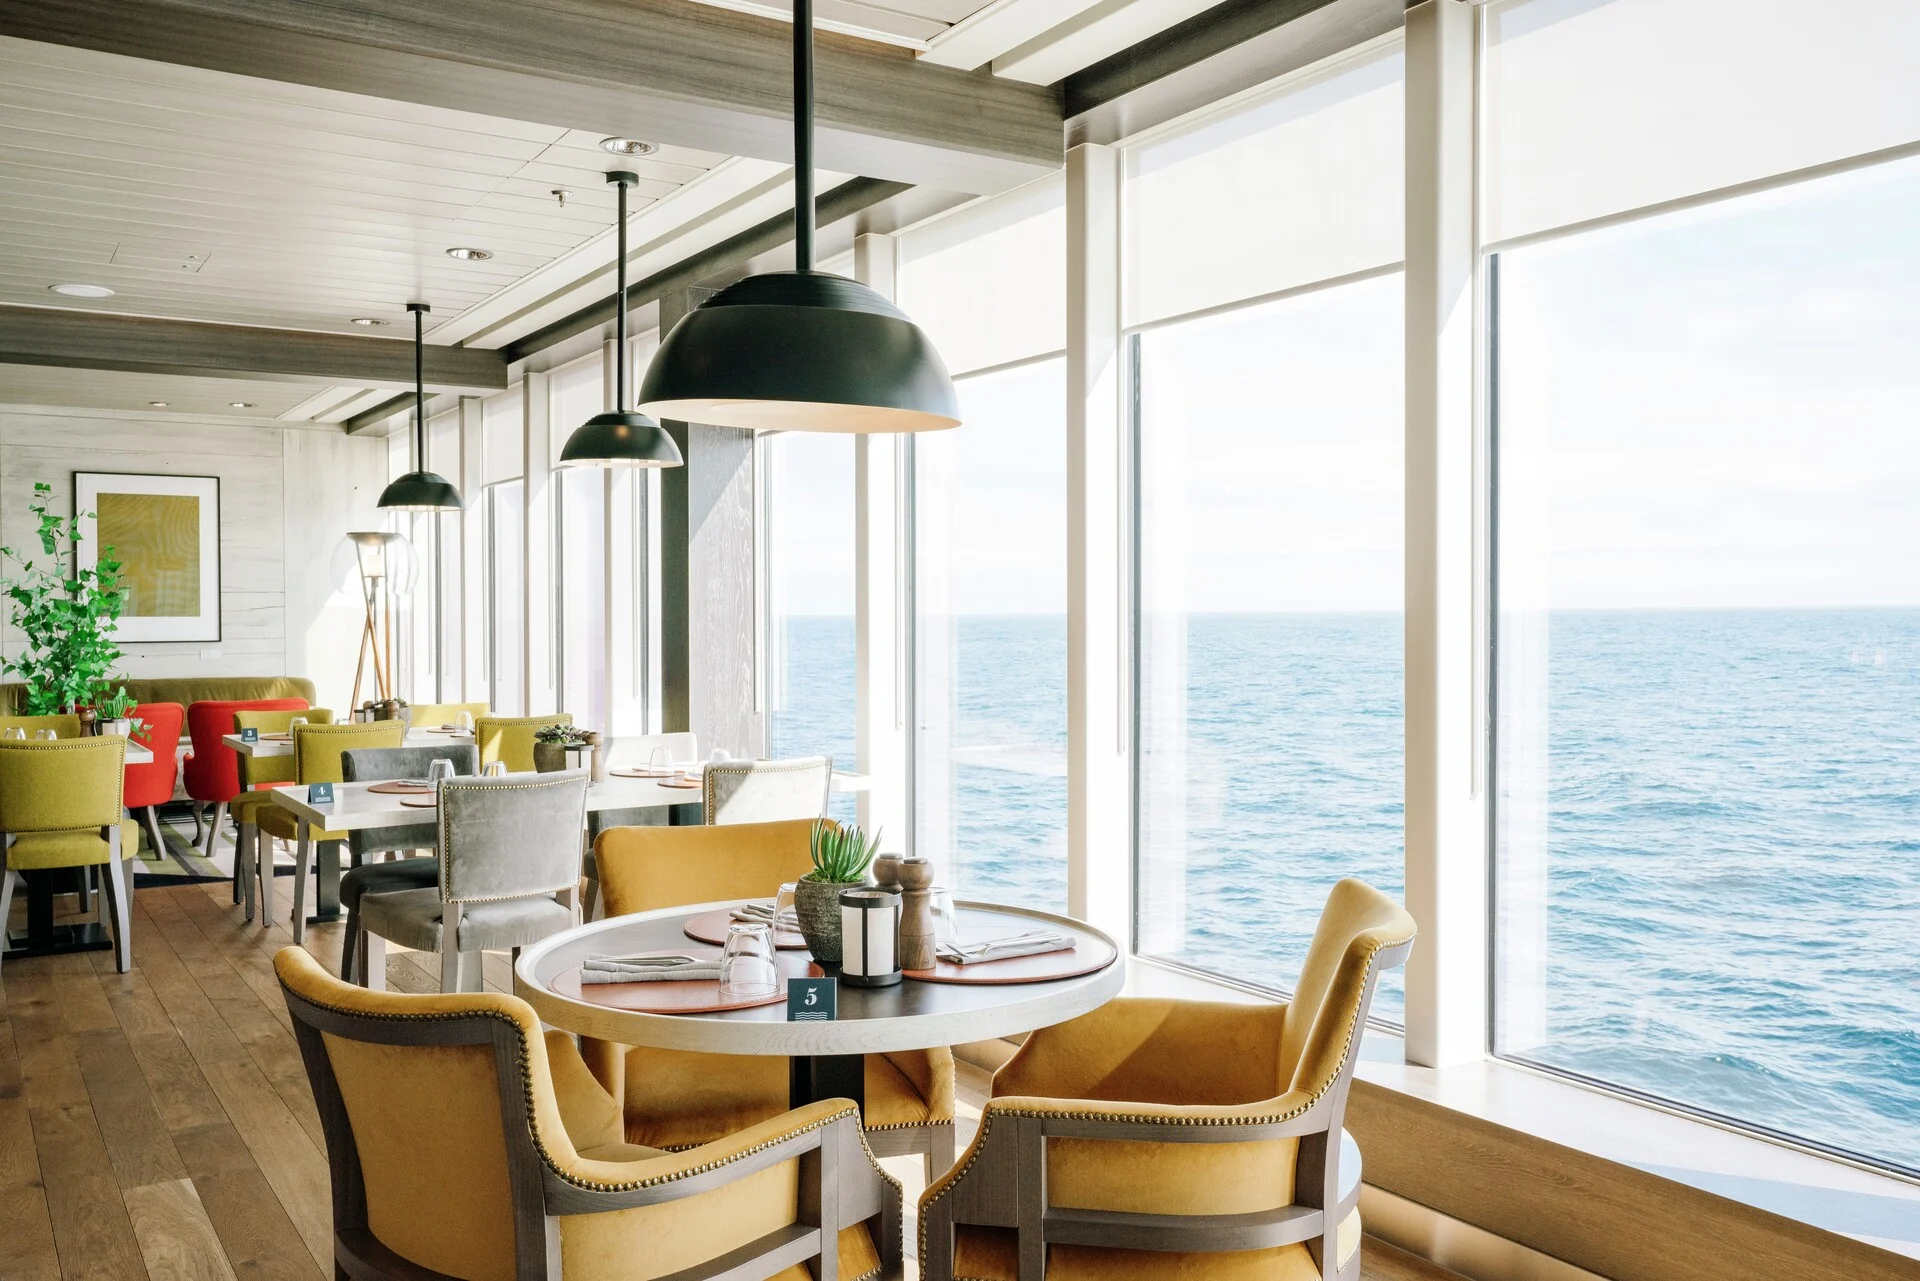 The relaxed atmosphere of Fredheim Restaurant on board MS Fridtjof Nansen. Credit Clara Tuma